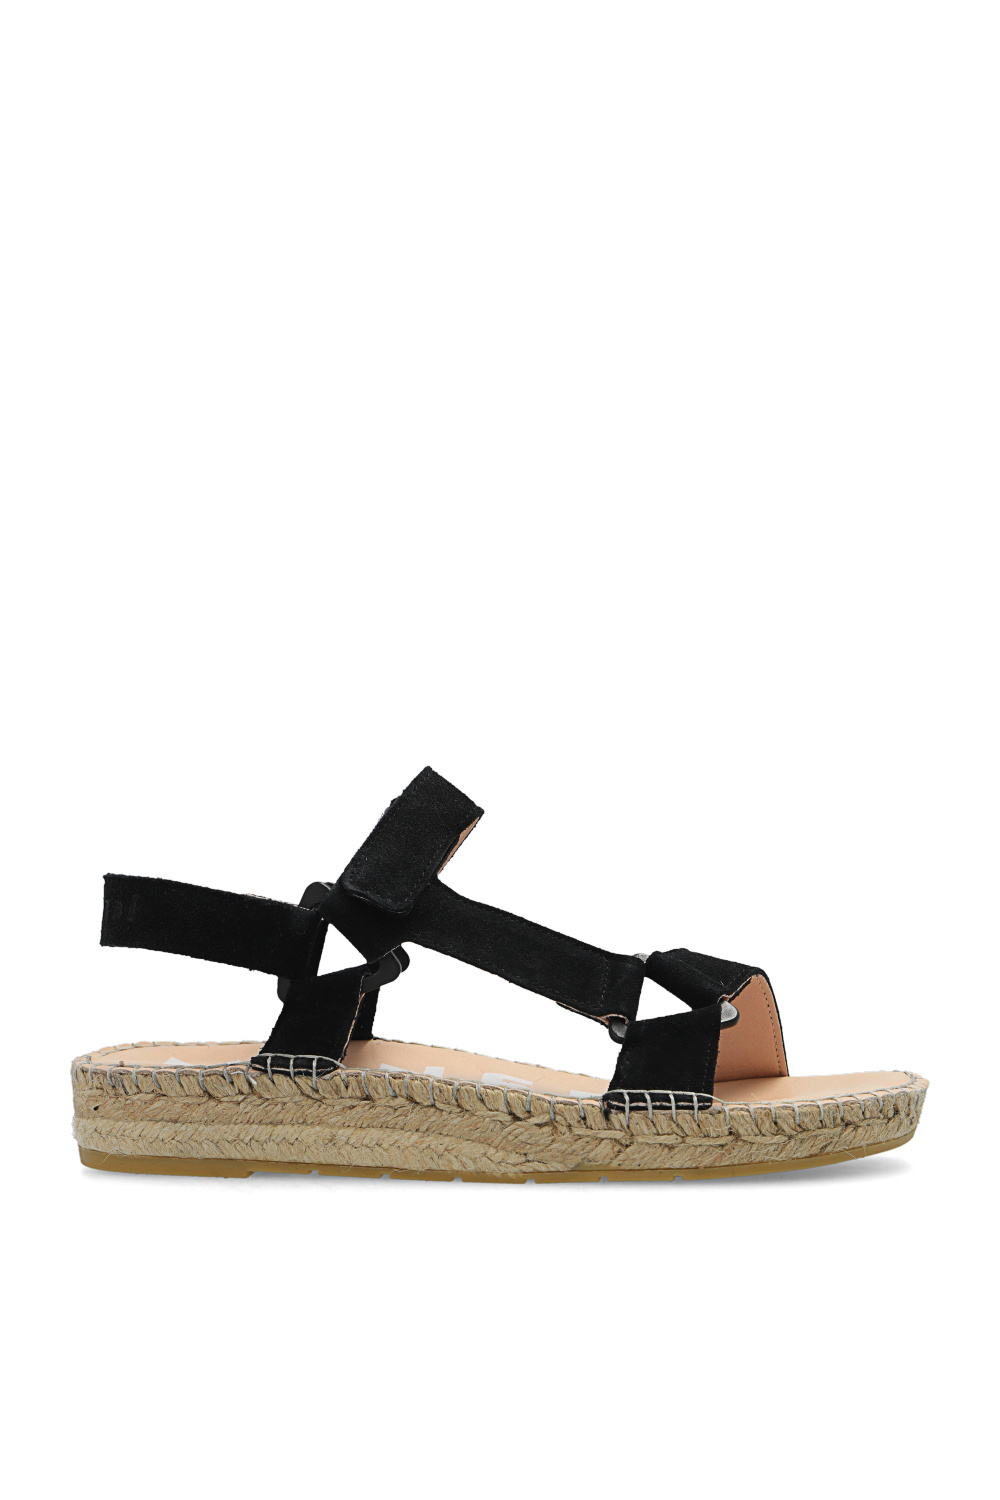 Manebí ‘Hamptons’ sandals